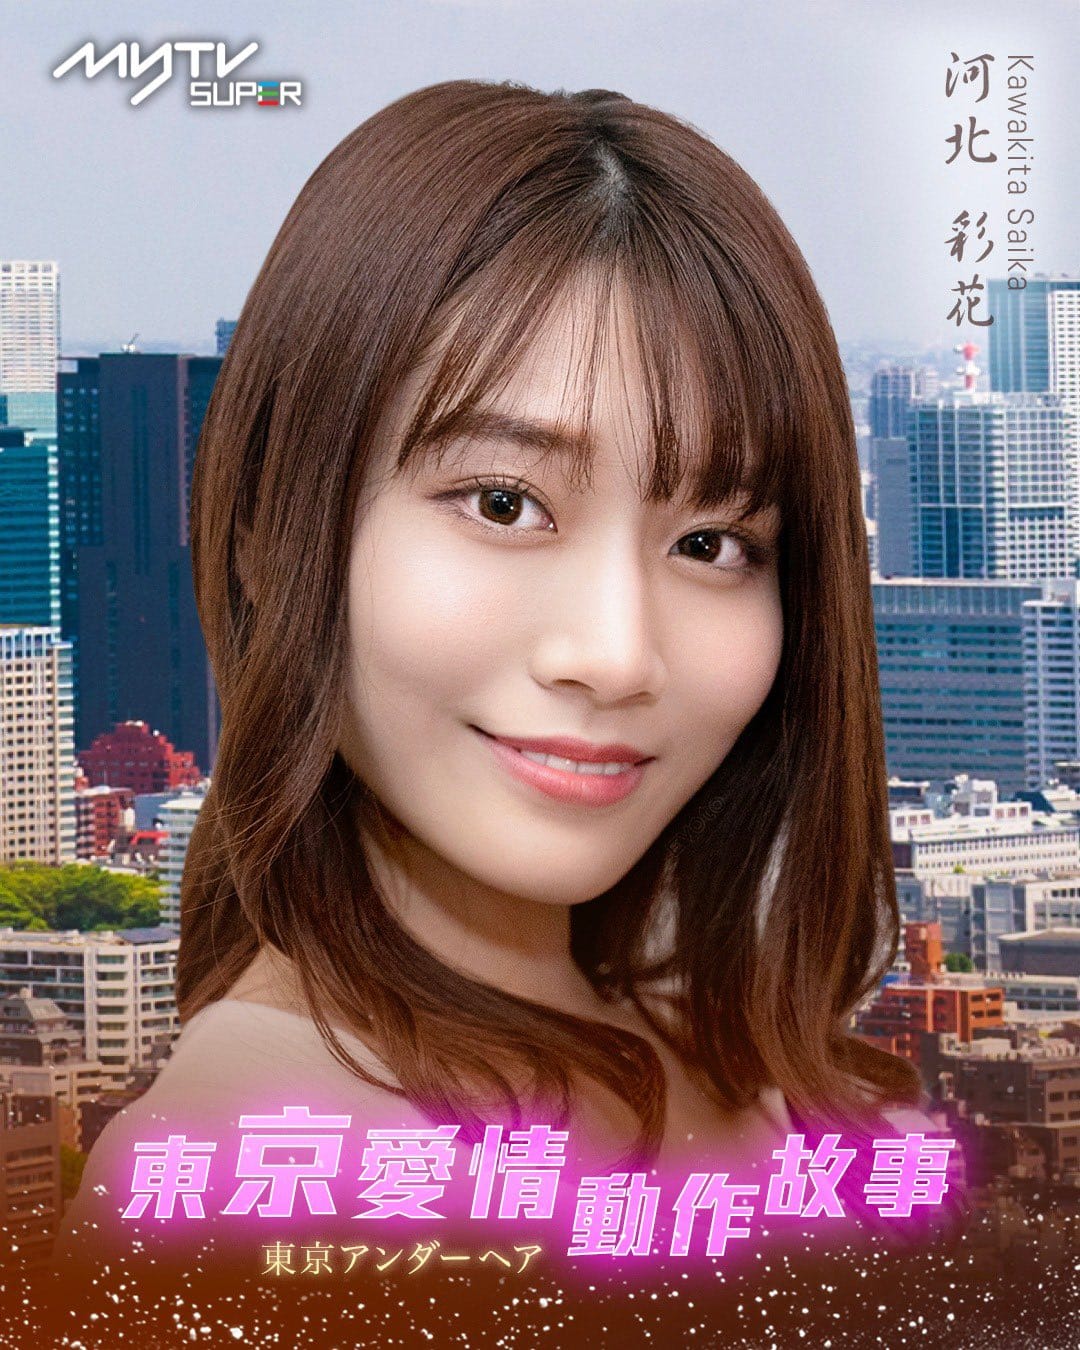 Tokyo Love Action Story, 10 ดาราAV, Saika Kawakita, ไซกะ คาวาคิตะ